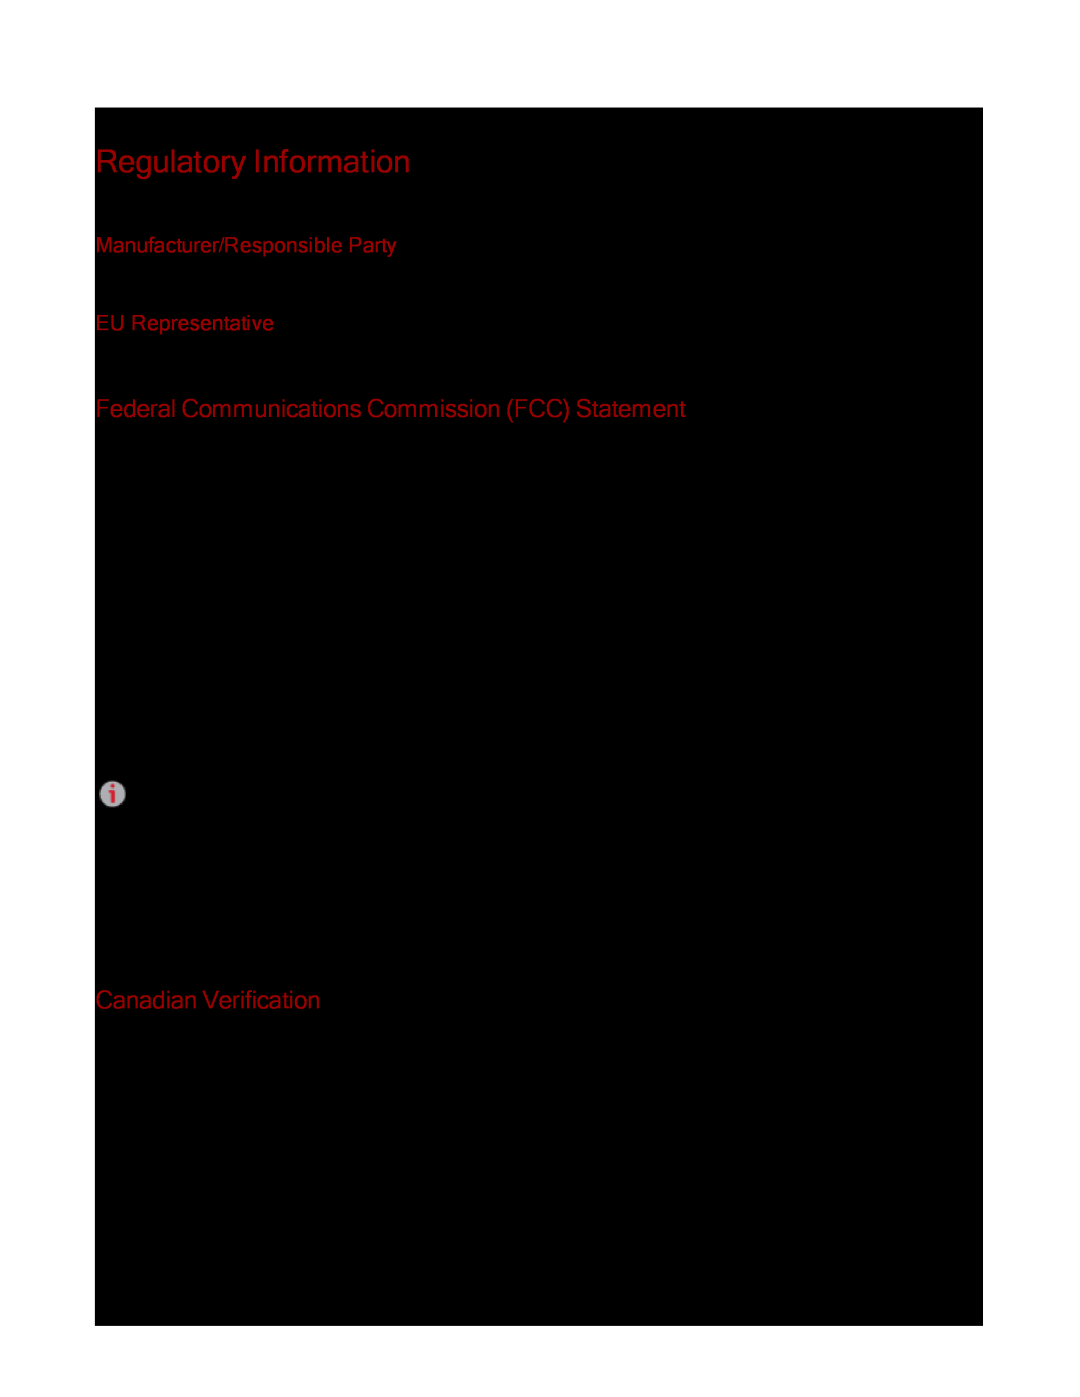 Lenovo 70B89003NA manual Regulatory Information, Federal Communications Commission FCC Statement, Canadian Verification 